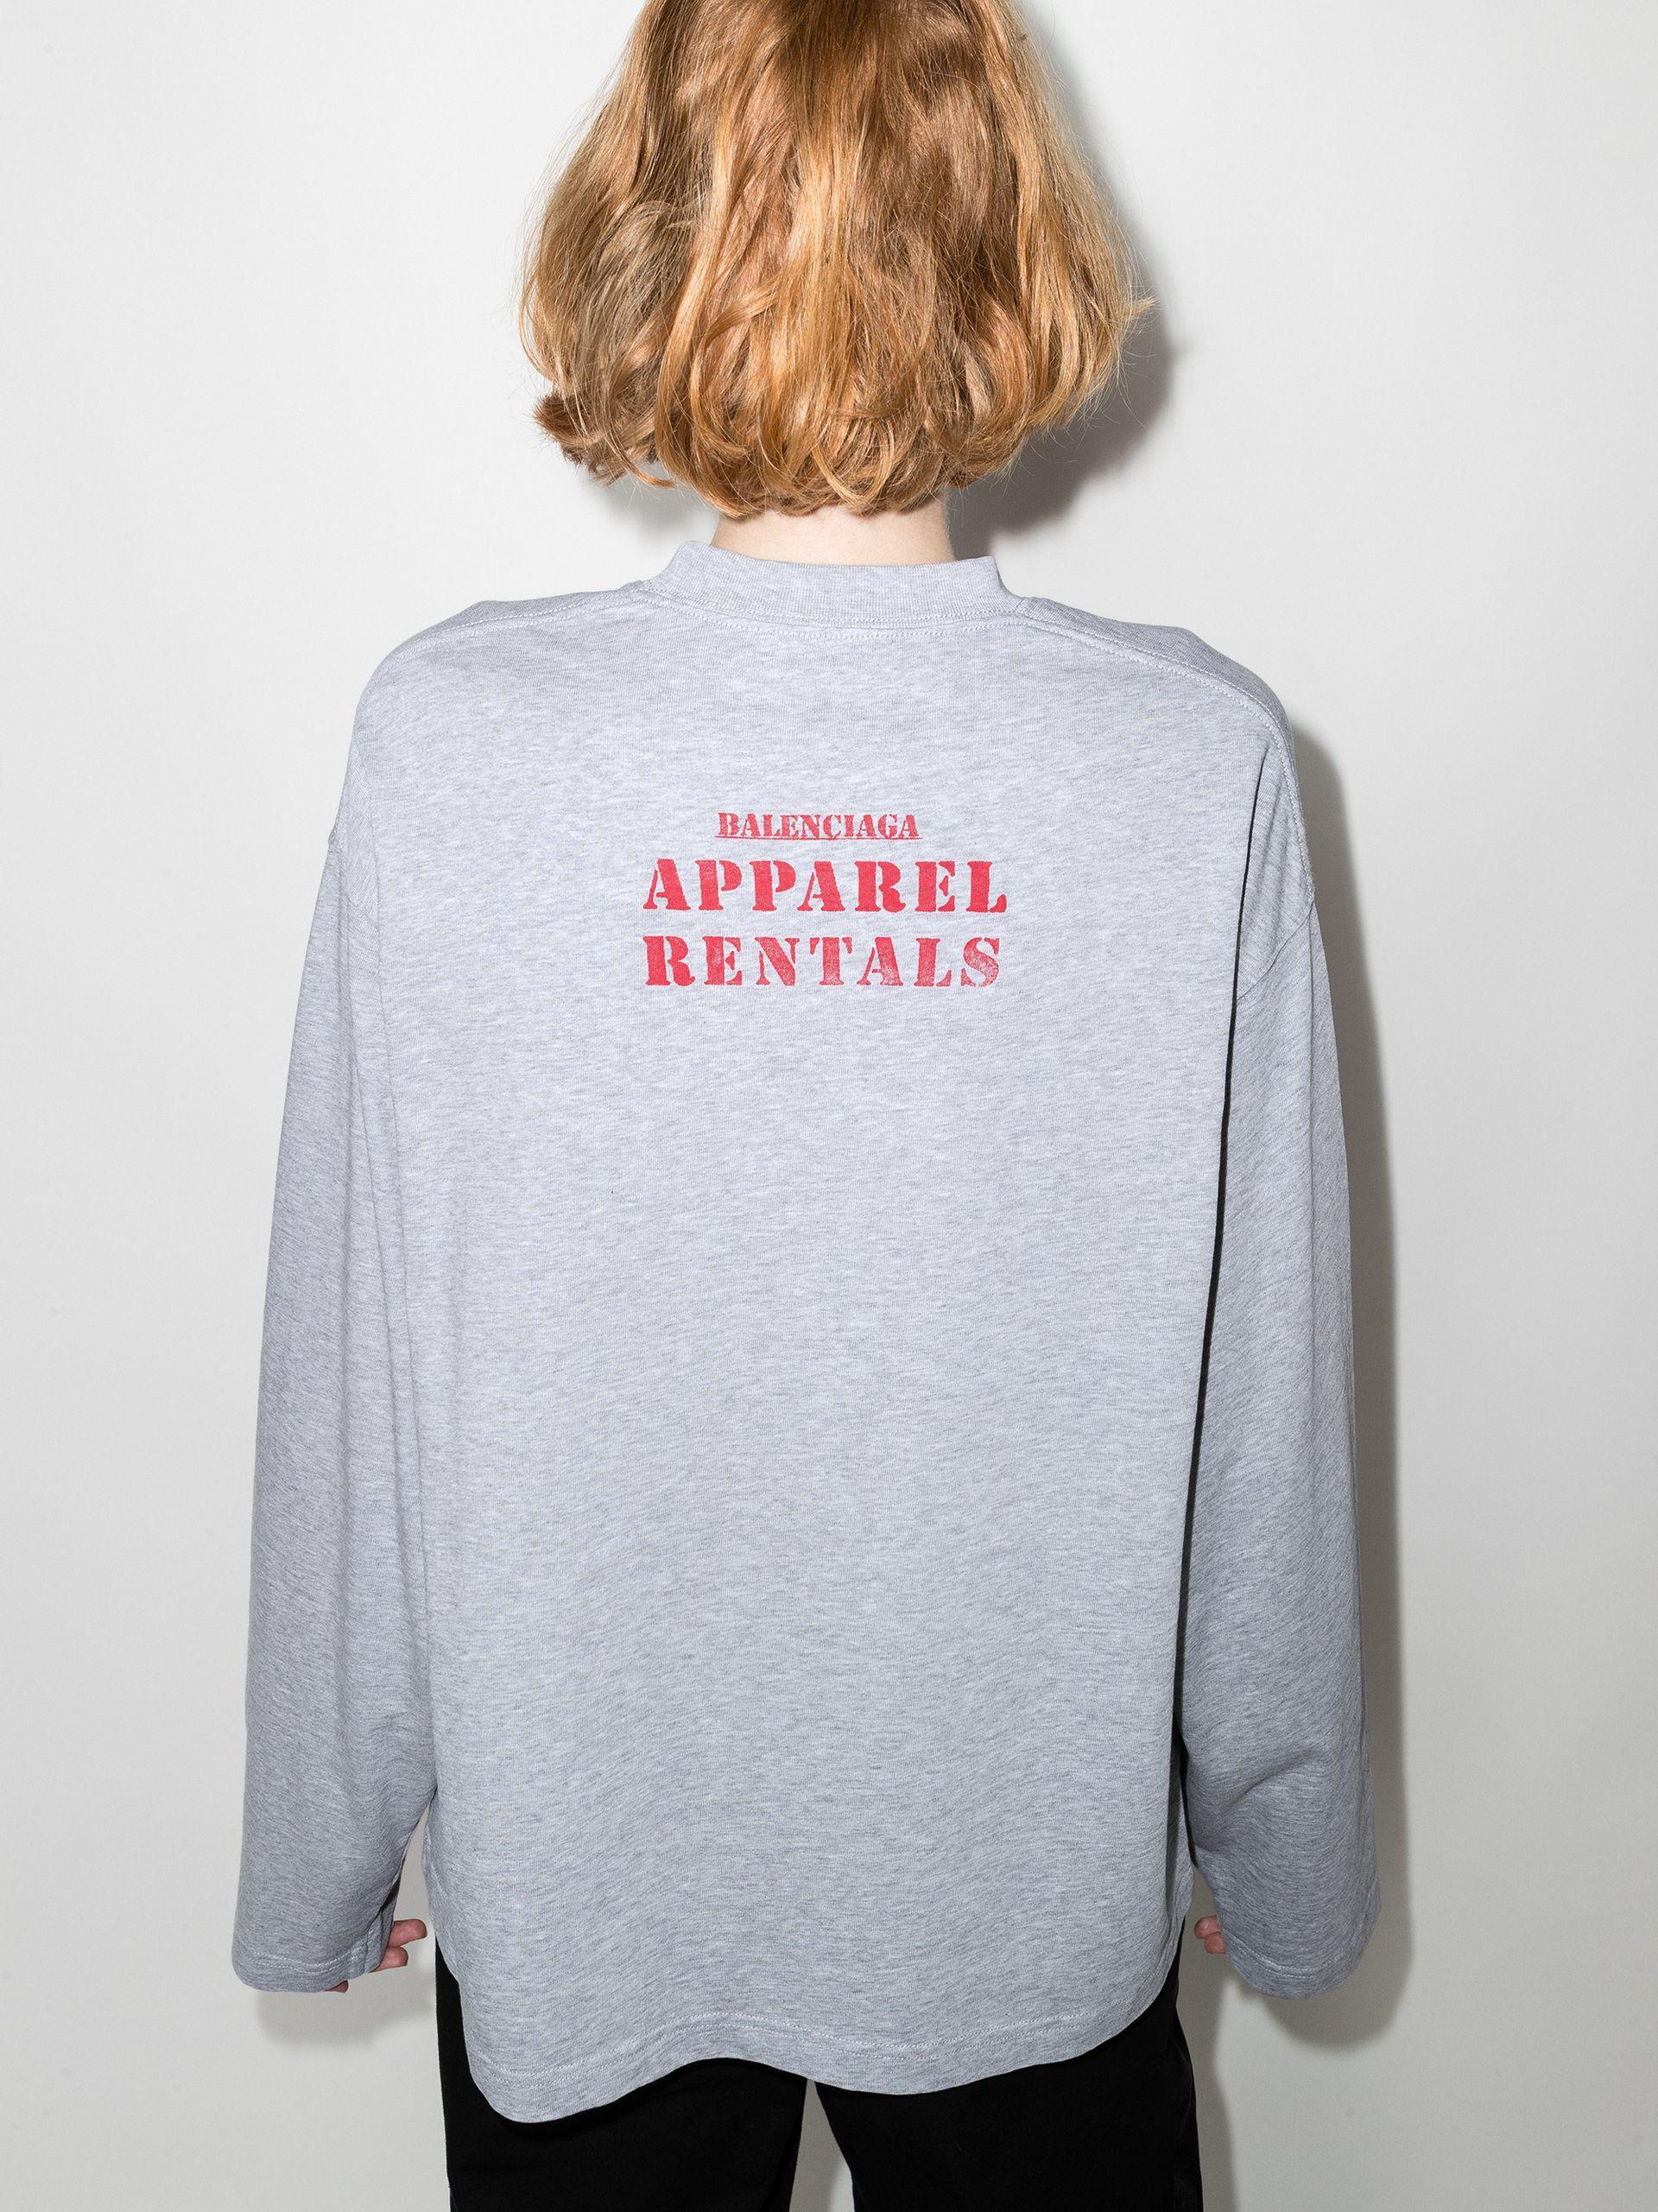 Balenciaga Apparel Rental Long Sleeve T-shirt in Gray | Lyst